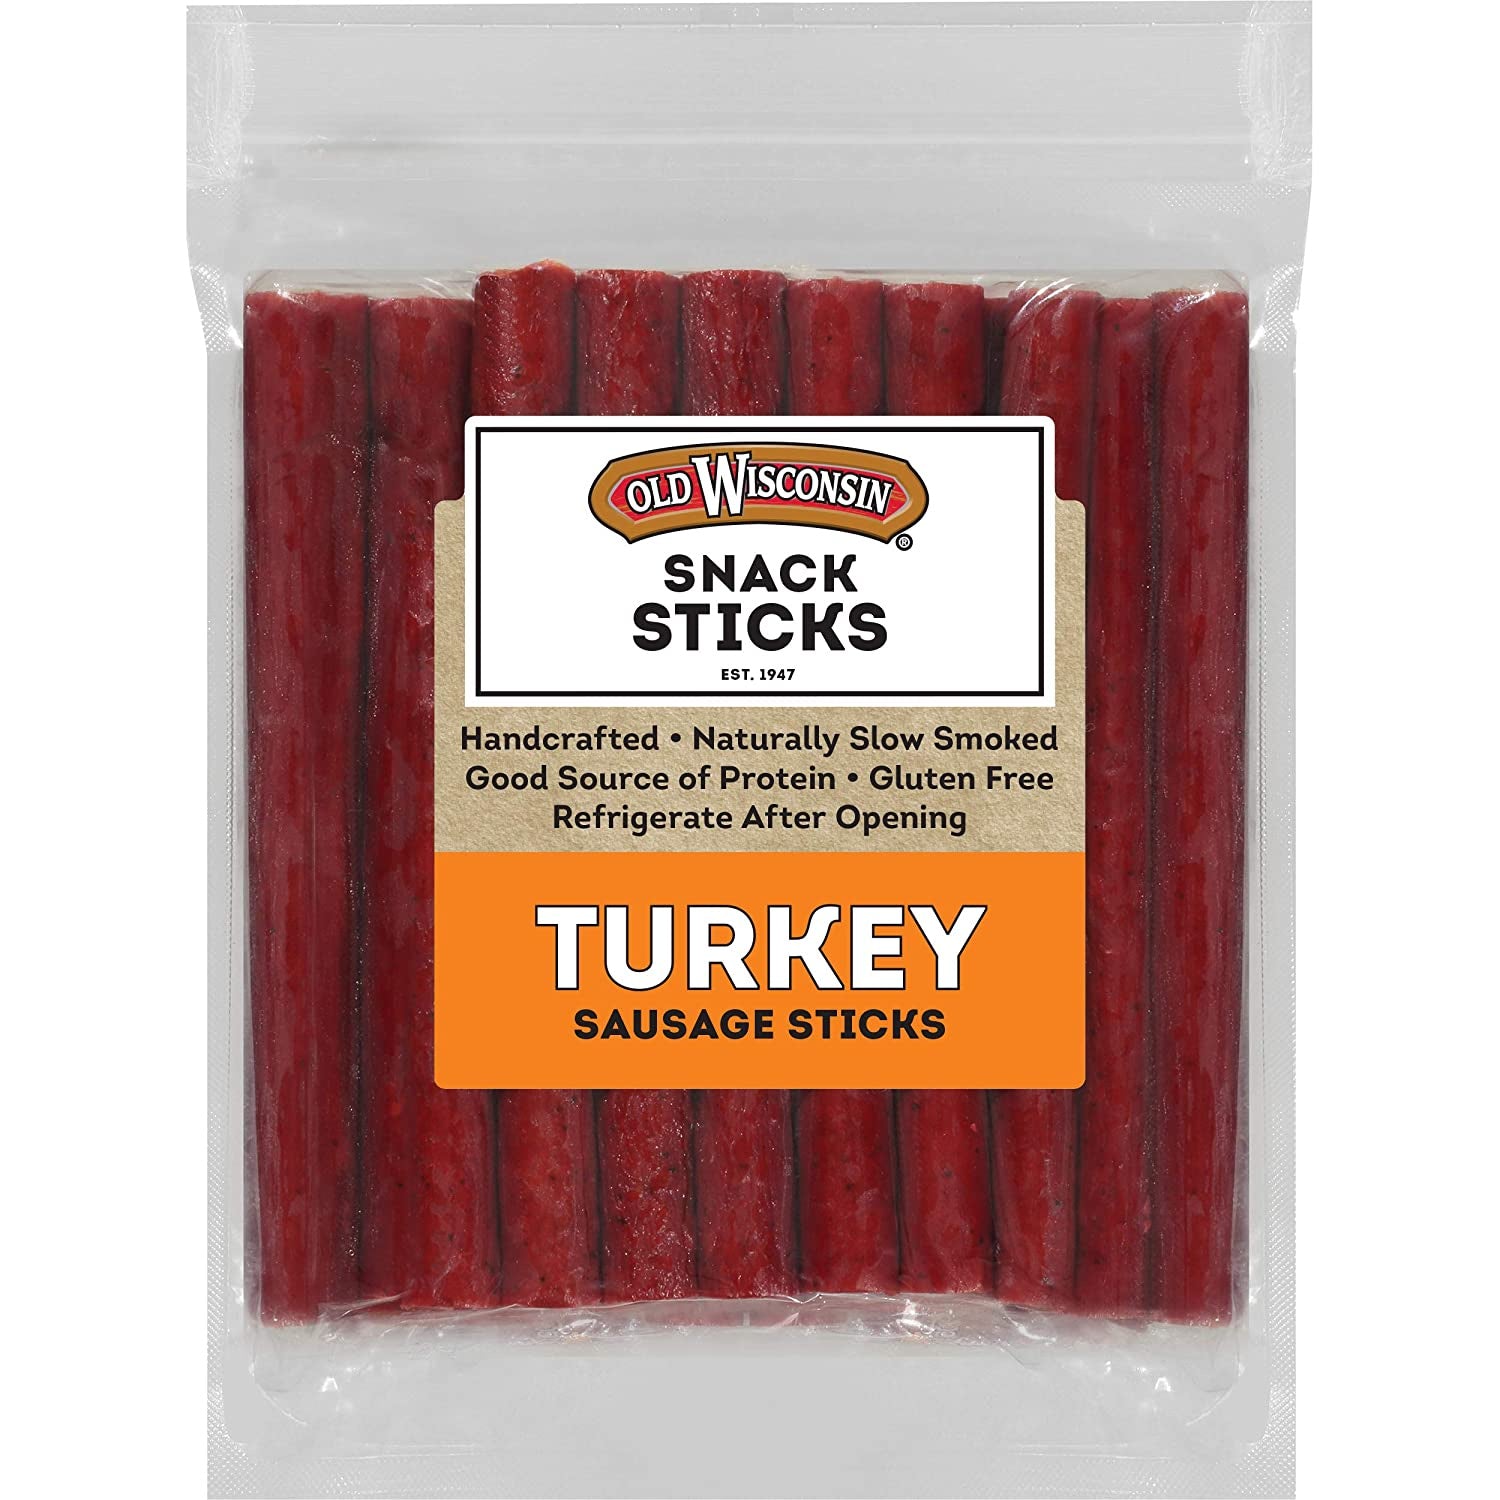 Old Wisconsin Turkey Sausage Sticks 8 oz.